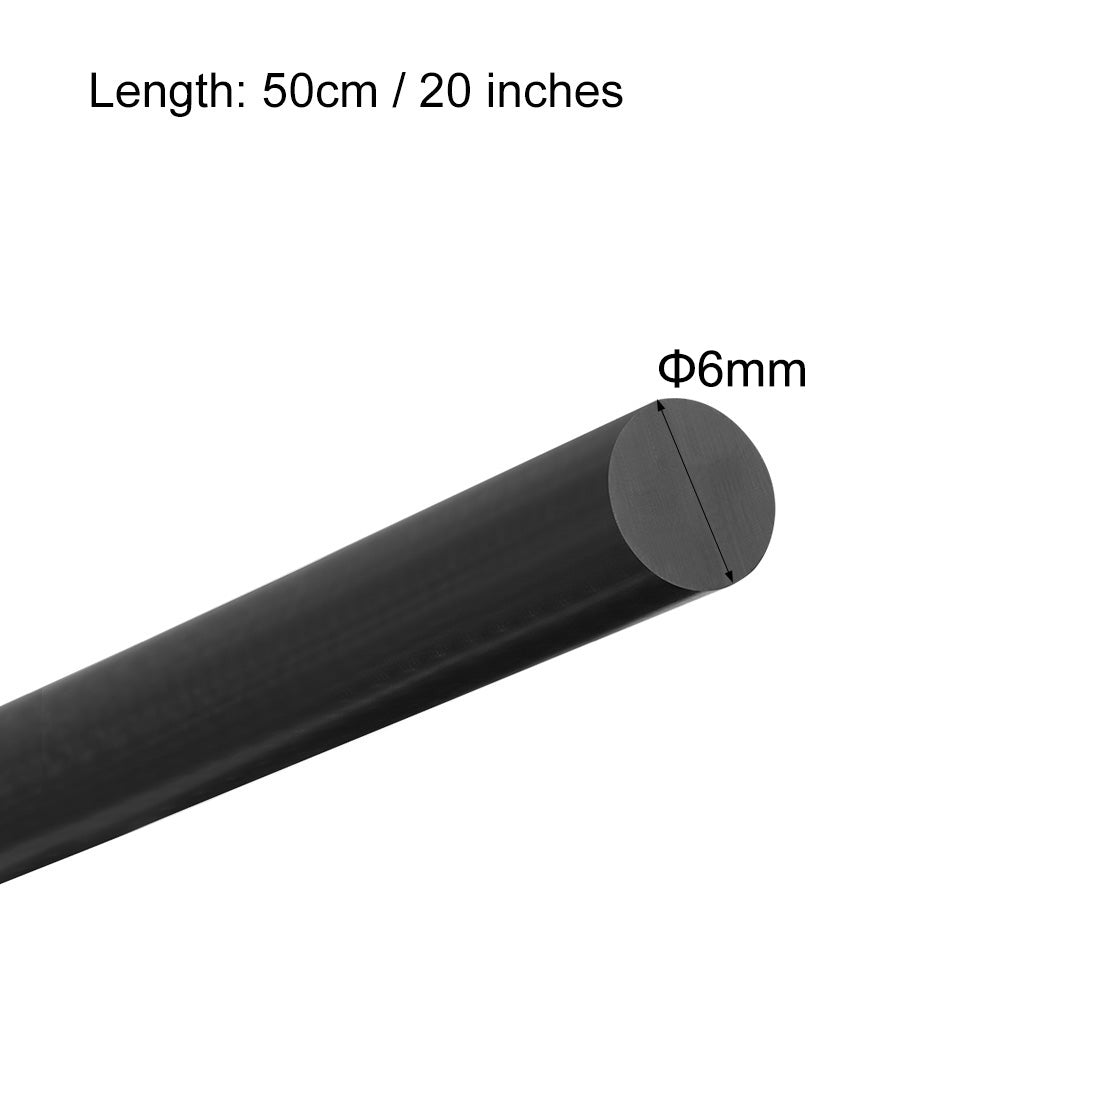 uxcell Uxcell Plastic Round Rod,6mm Dia 50cm Black Engineering Plastic Round Bar 3pcs